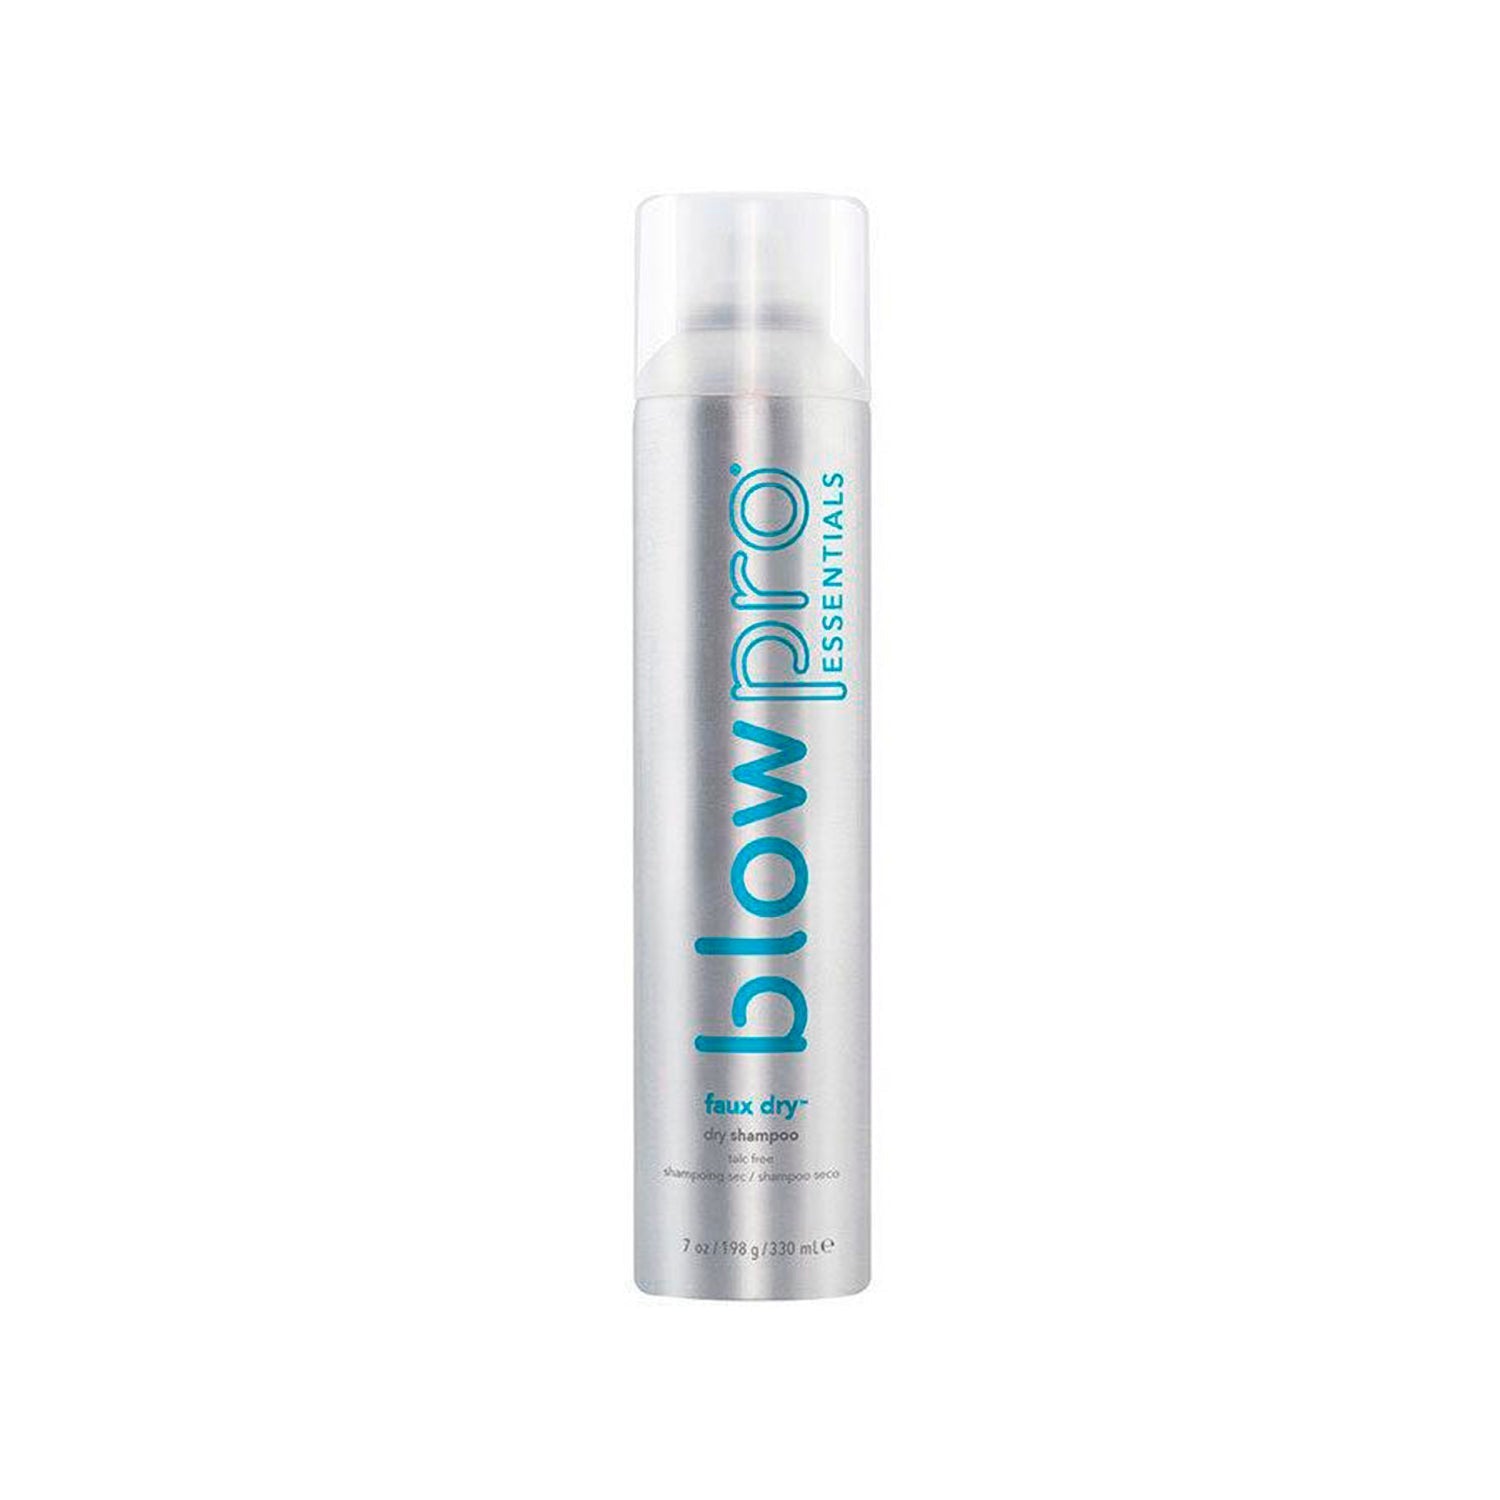 Blowpro Faux Dry Shampoo – Ocean Systems